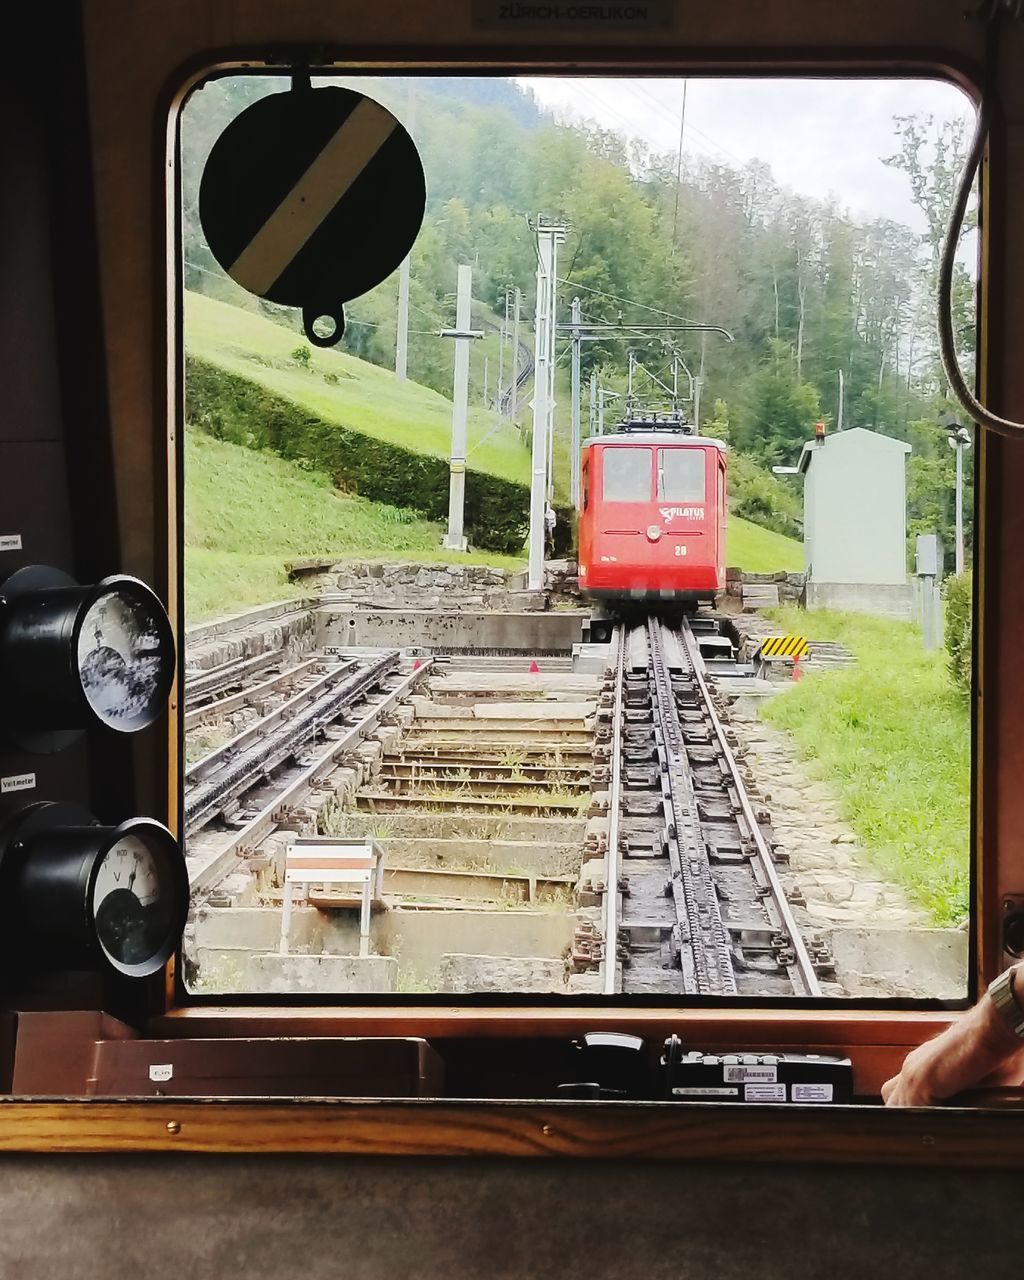 TRAIN ON RAILROAD TRACKS SEEN THROUGH WINDOW